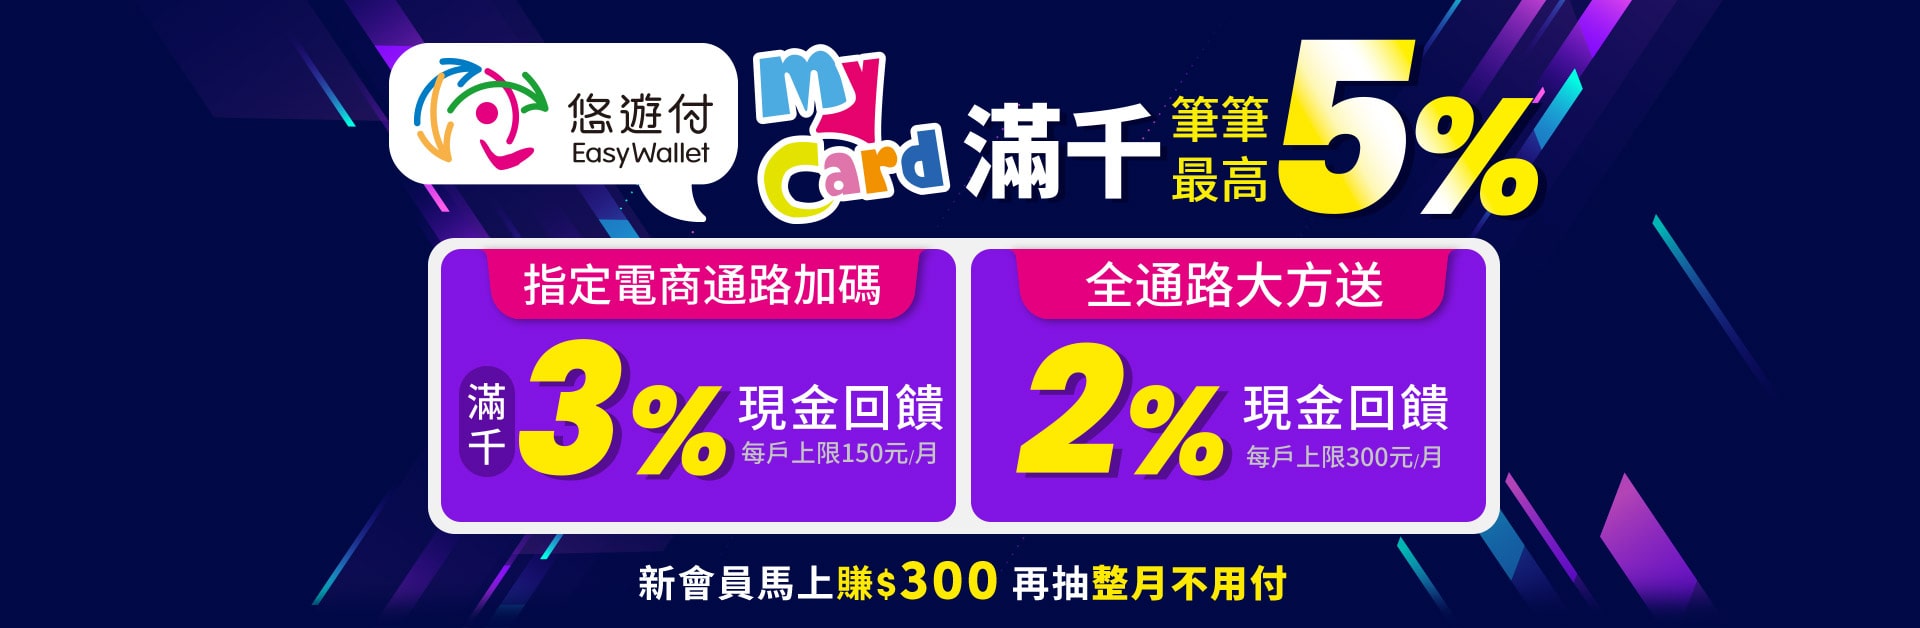   《MyCard x 悠遊付》-滿千最高回饋5%